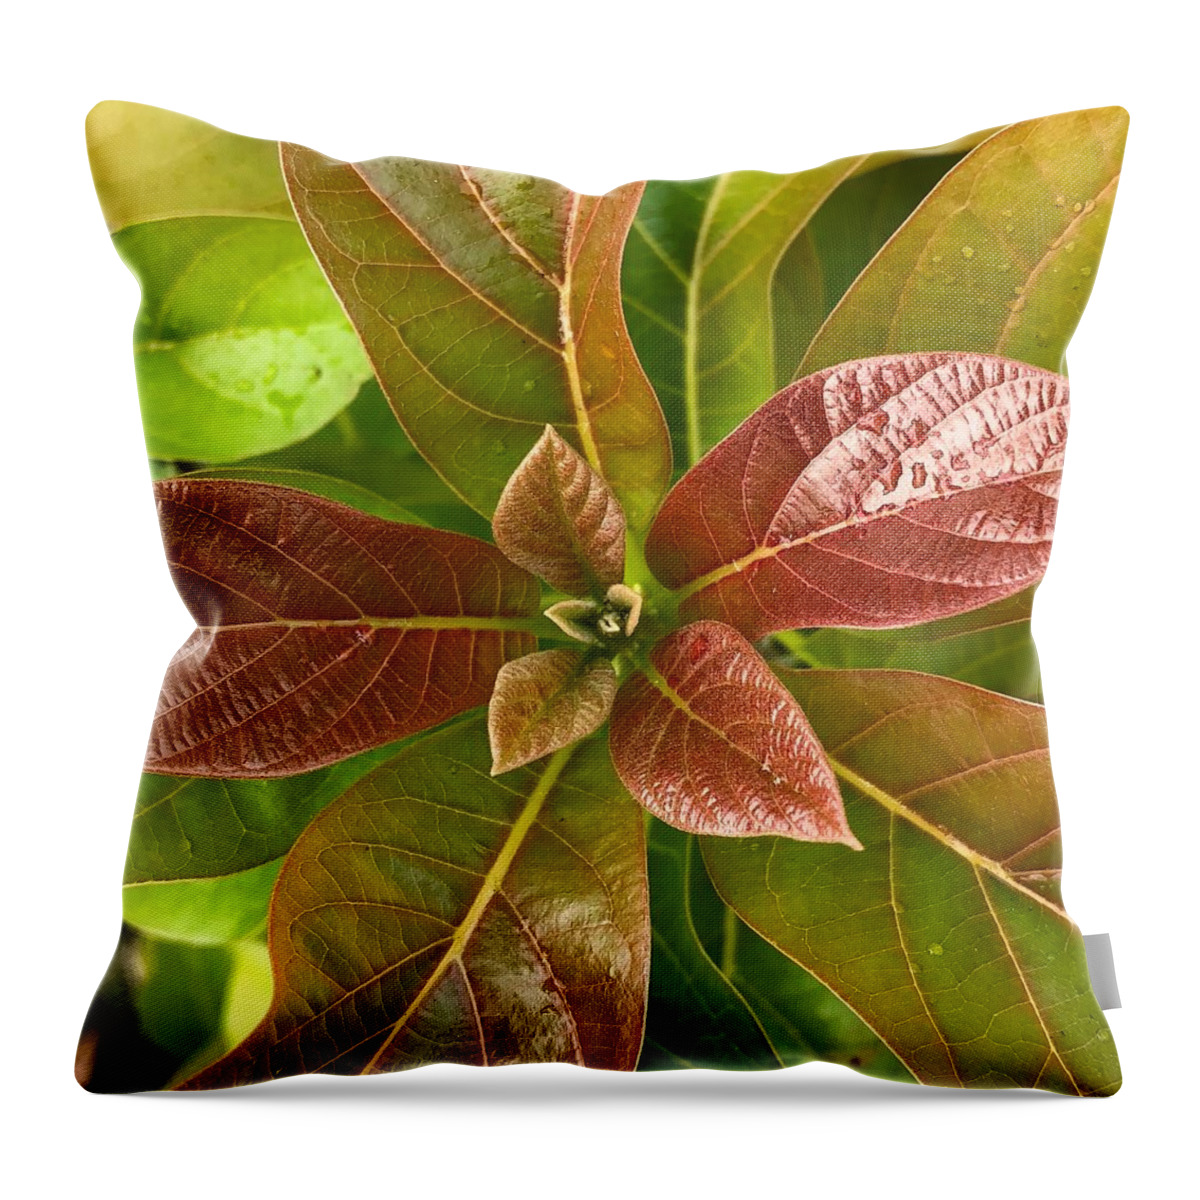 Persea Americana Throw Pillow featuring the photograph Avacodo Plant by Jori Reijonen